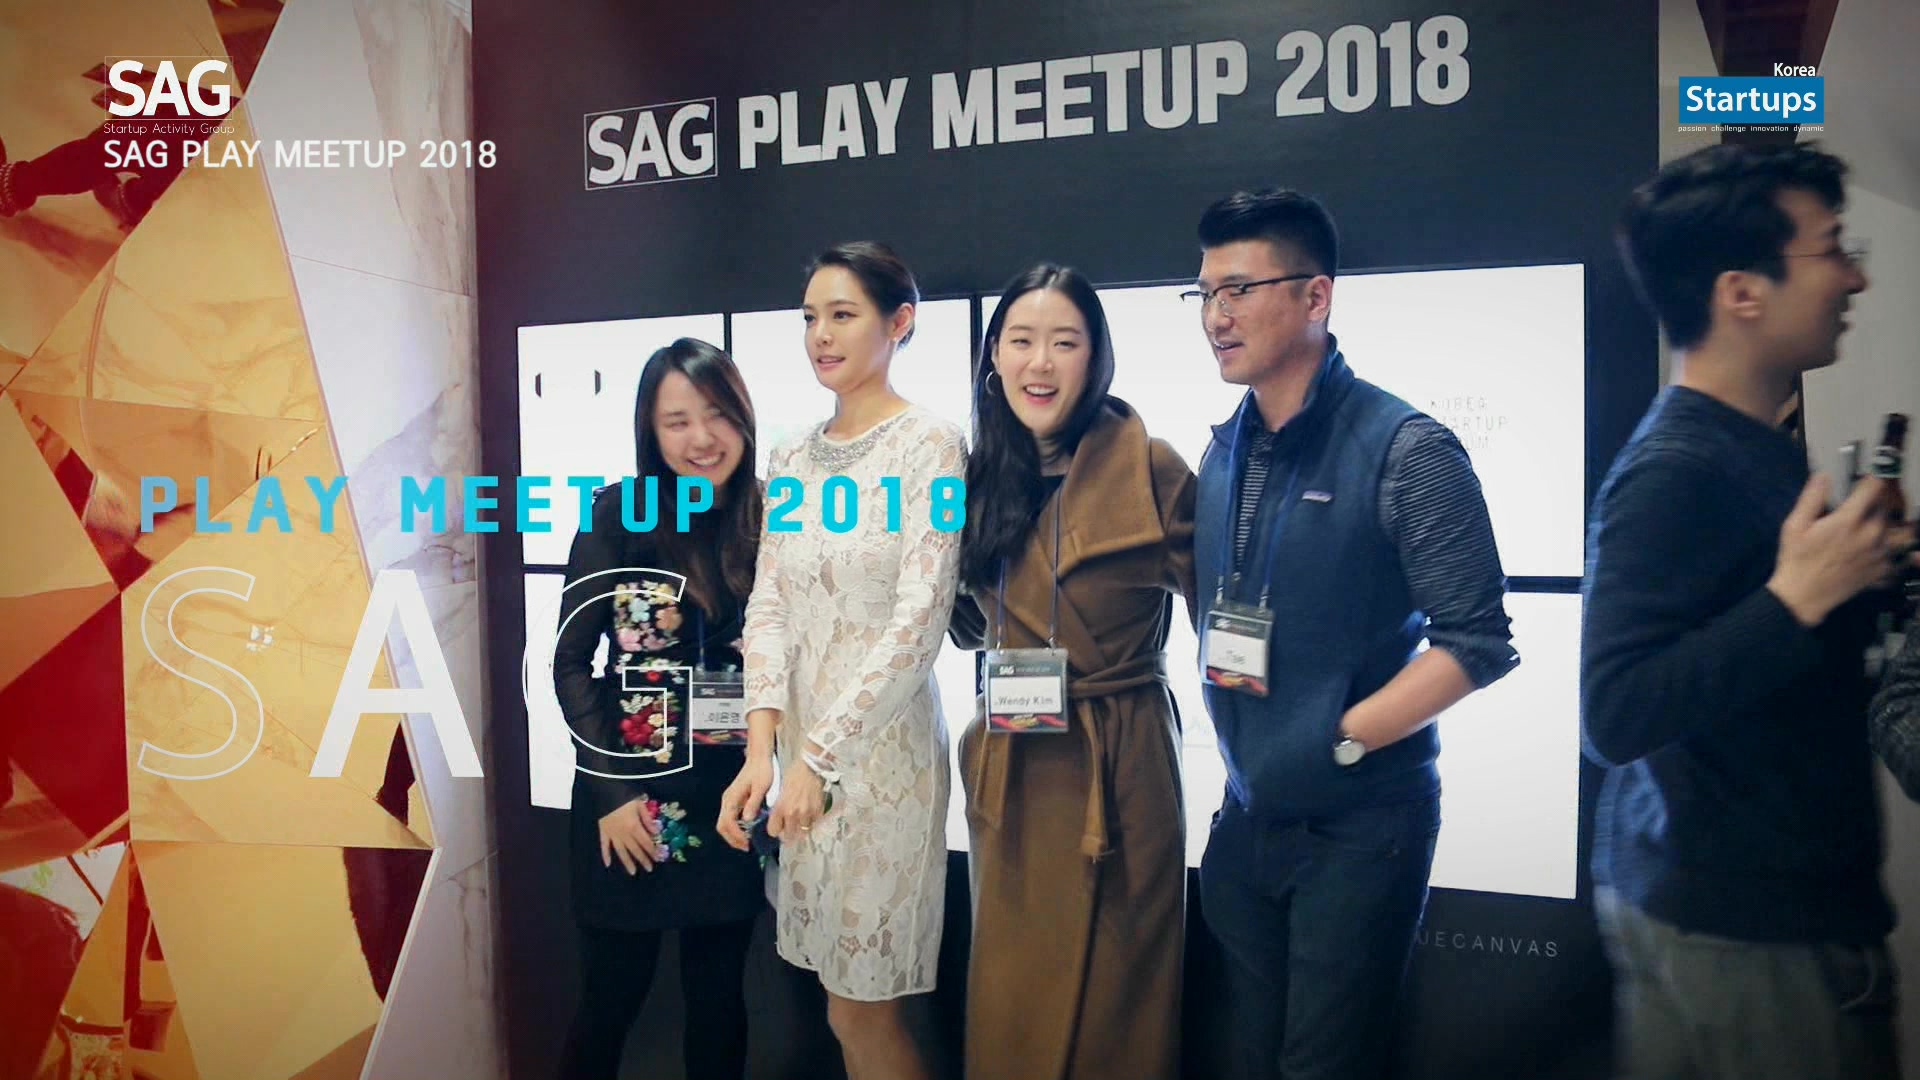 _Final_SAG_PLAY_Meetup_2018.mpeg_2018030